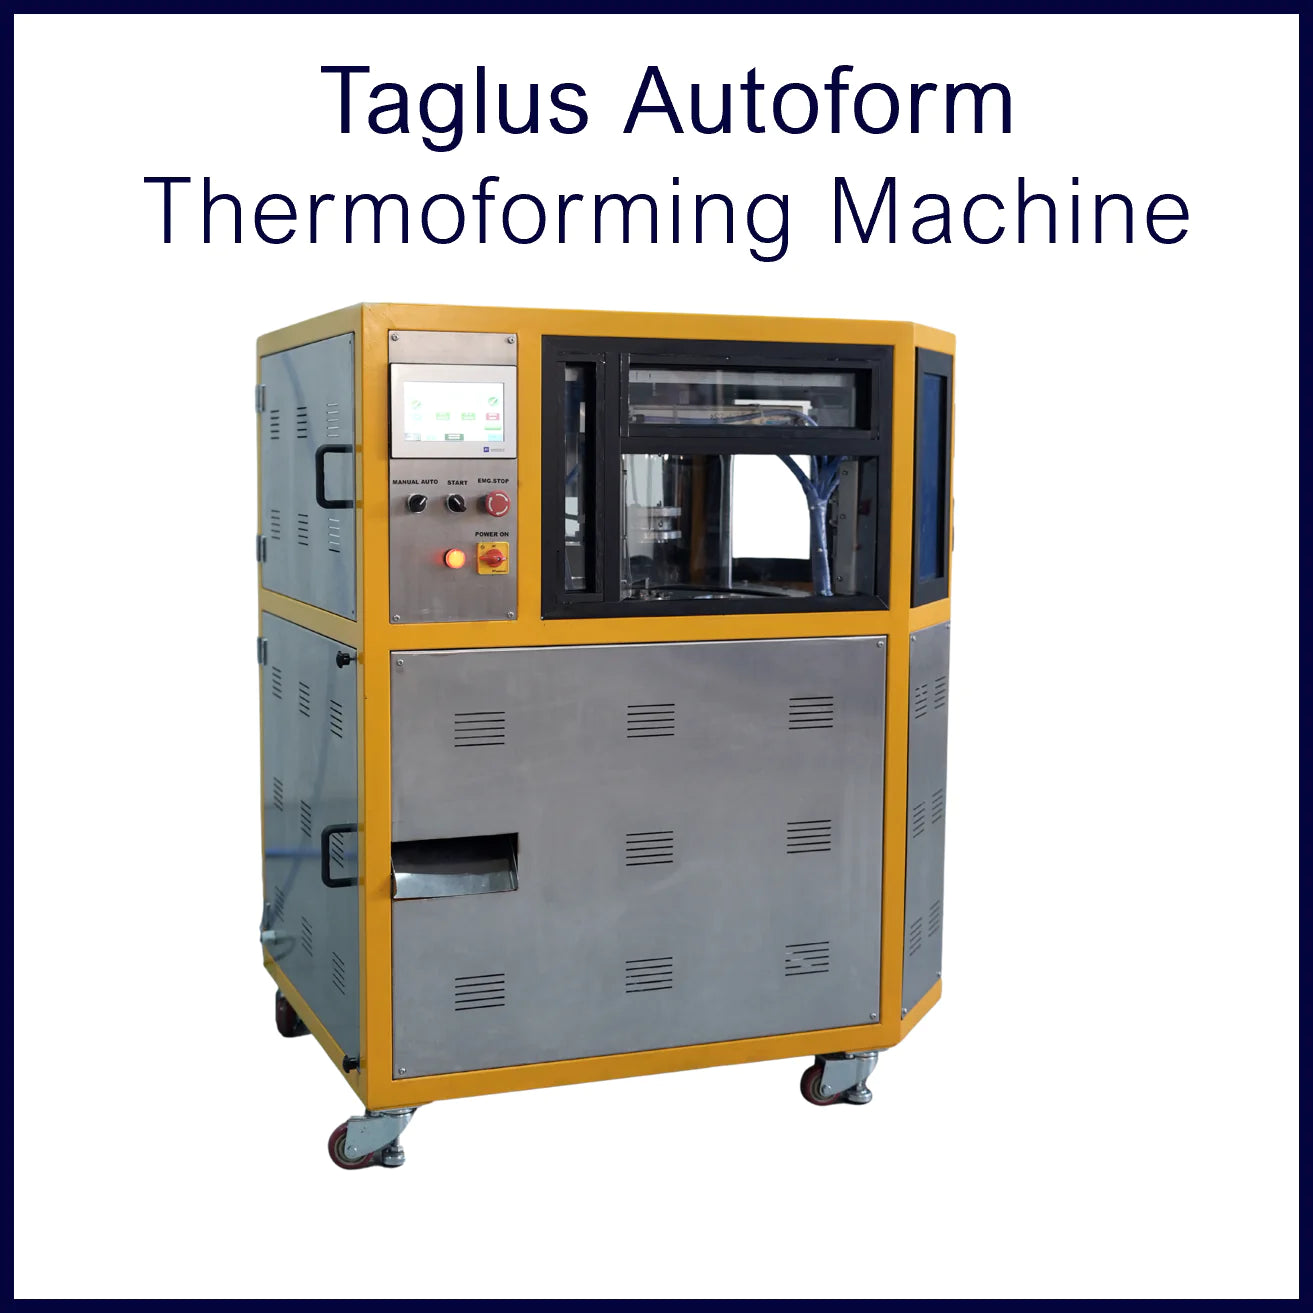 TAGLUS Autoform Thermoforming Machine - Available Soon